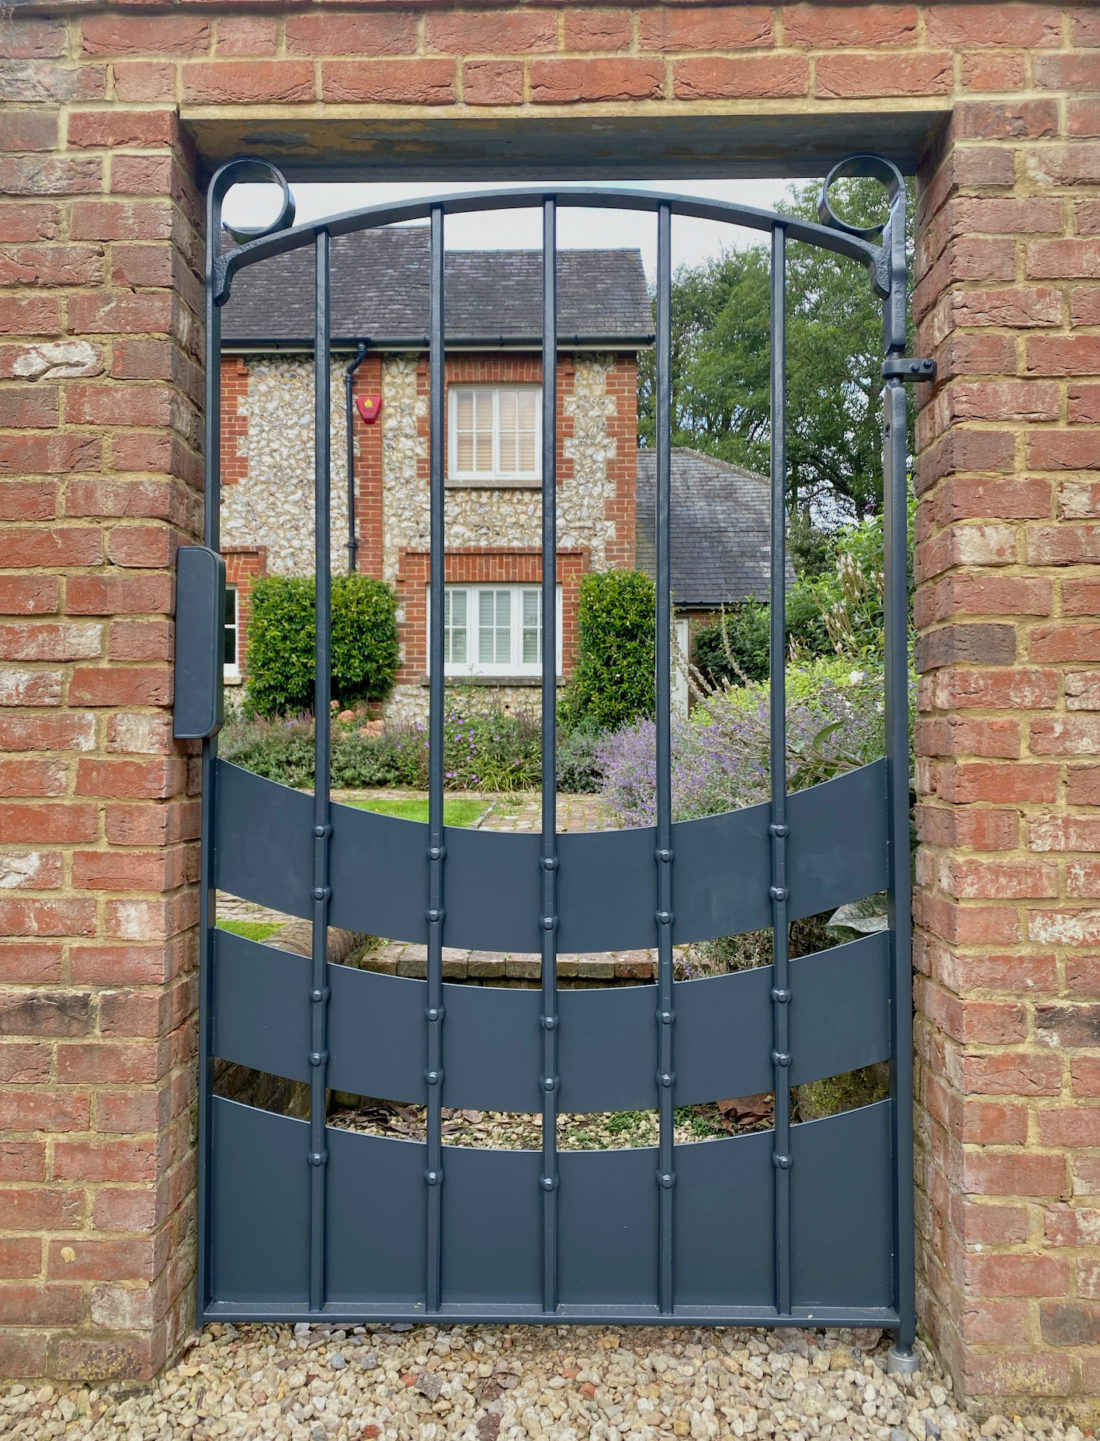 Plate-garden-gate-iron-forged